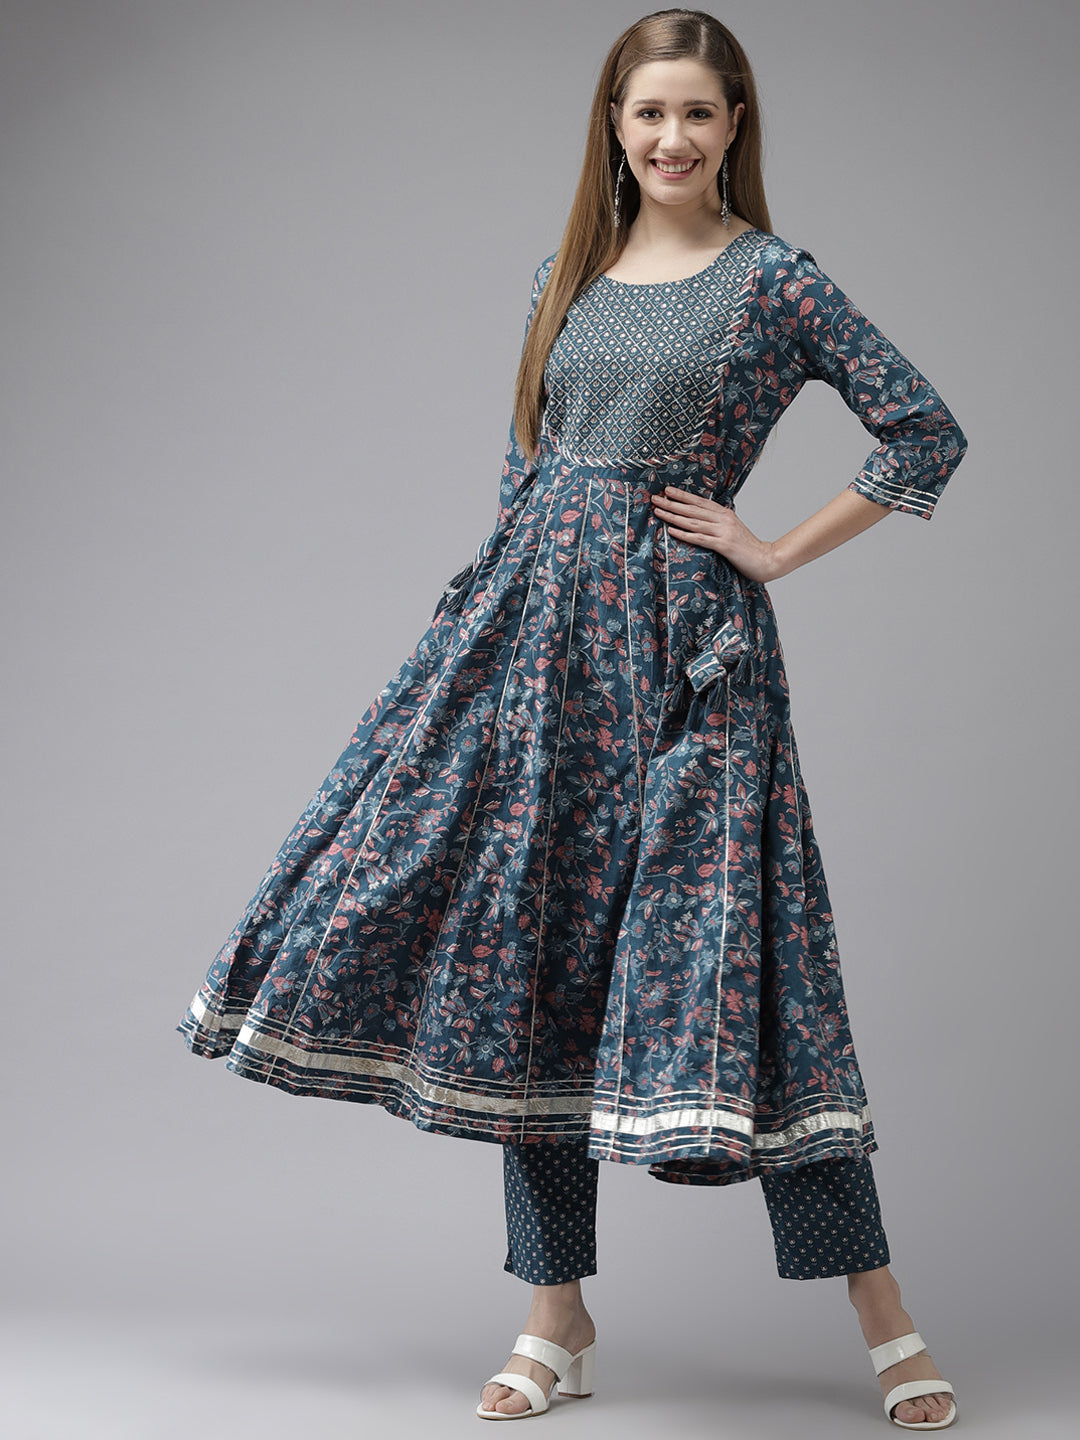 Ishin Women's Cotton Blend Teal Embroidered Anarkali Kurta Trouser Set